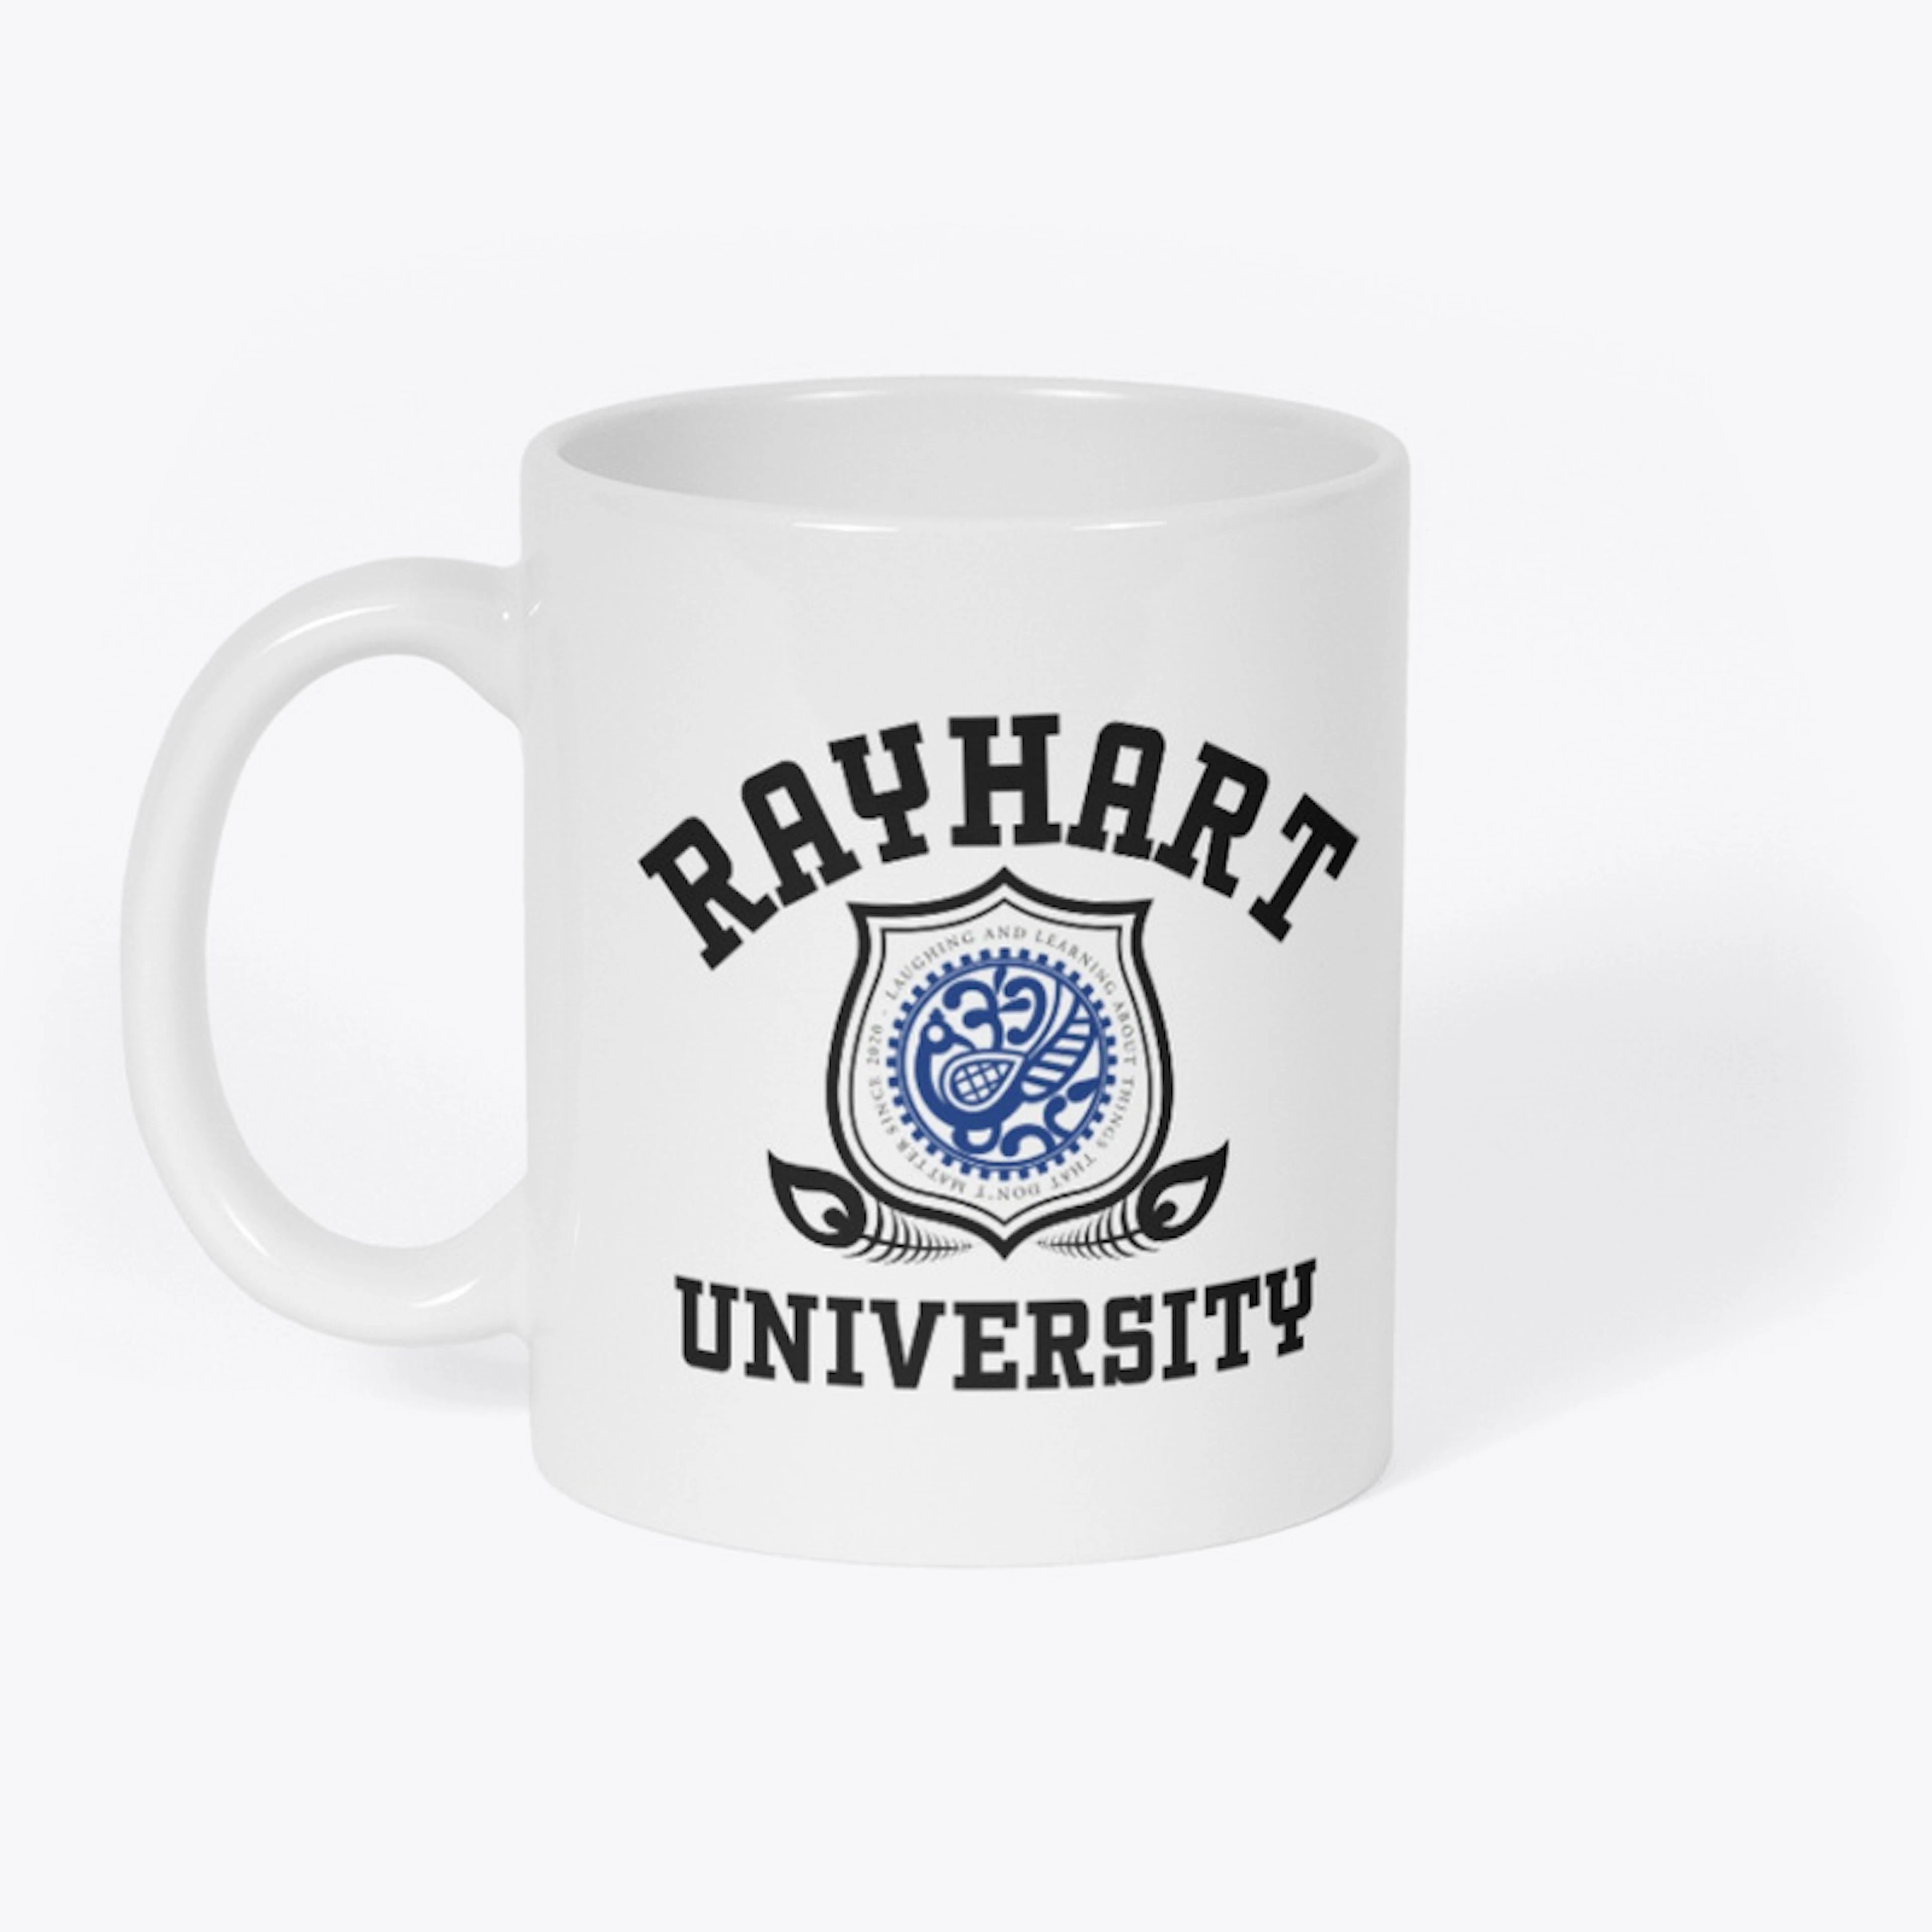 Rayhart University Gear